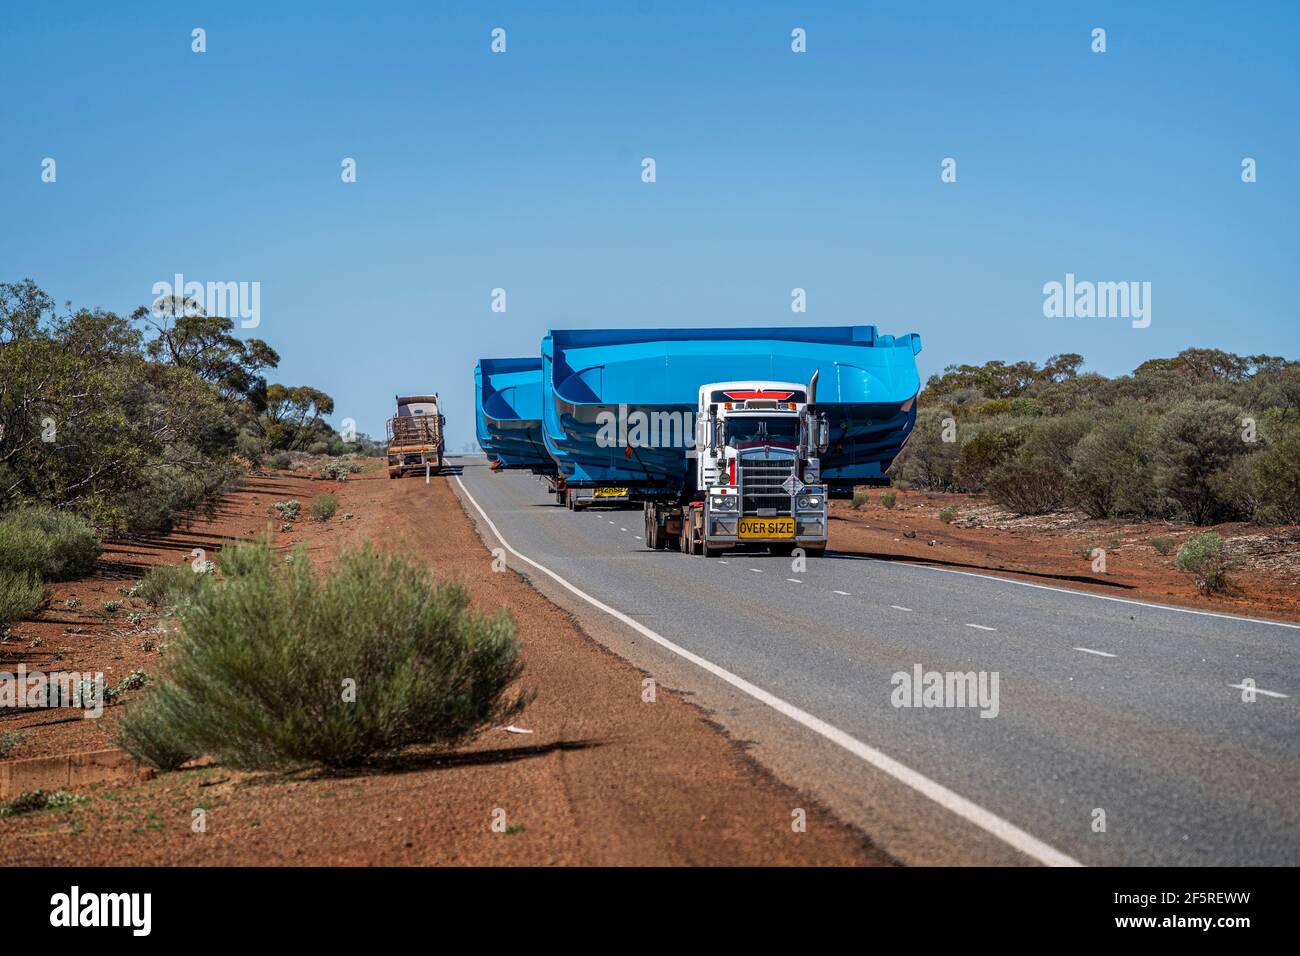 Macchine pesanti per miniera trasportate su autocarri ferroviari, Australia occidentale Foto Stock